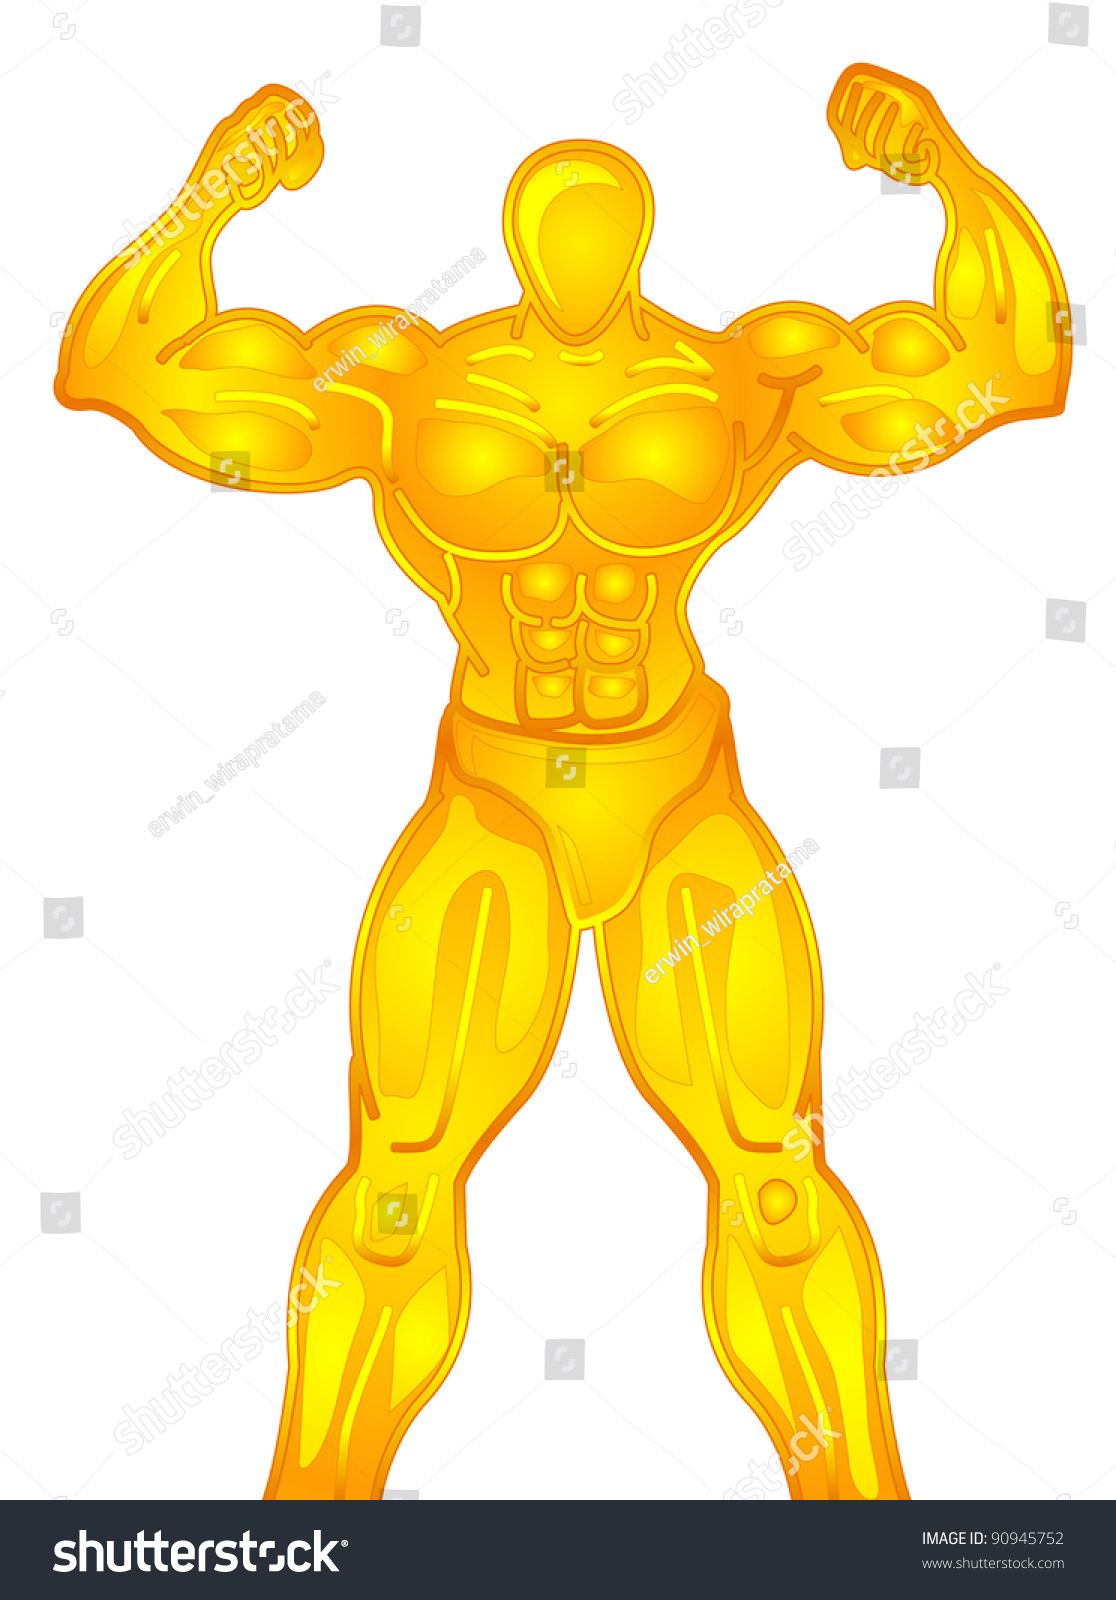 Illustration Of Muscle Man - 90945752 : Shutterstock